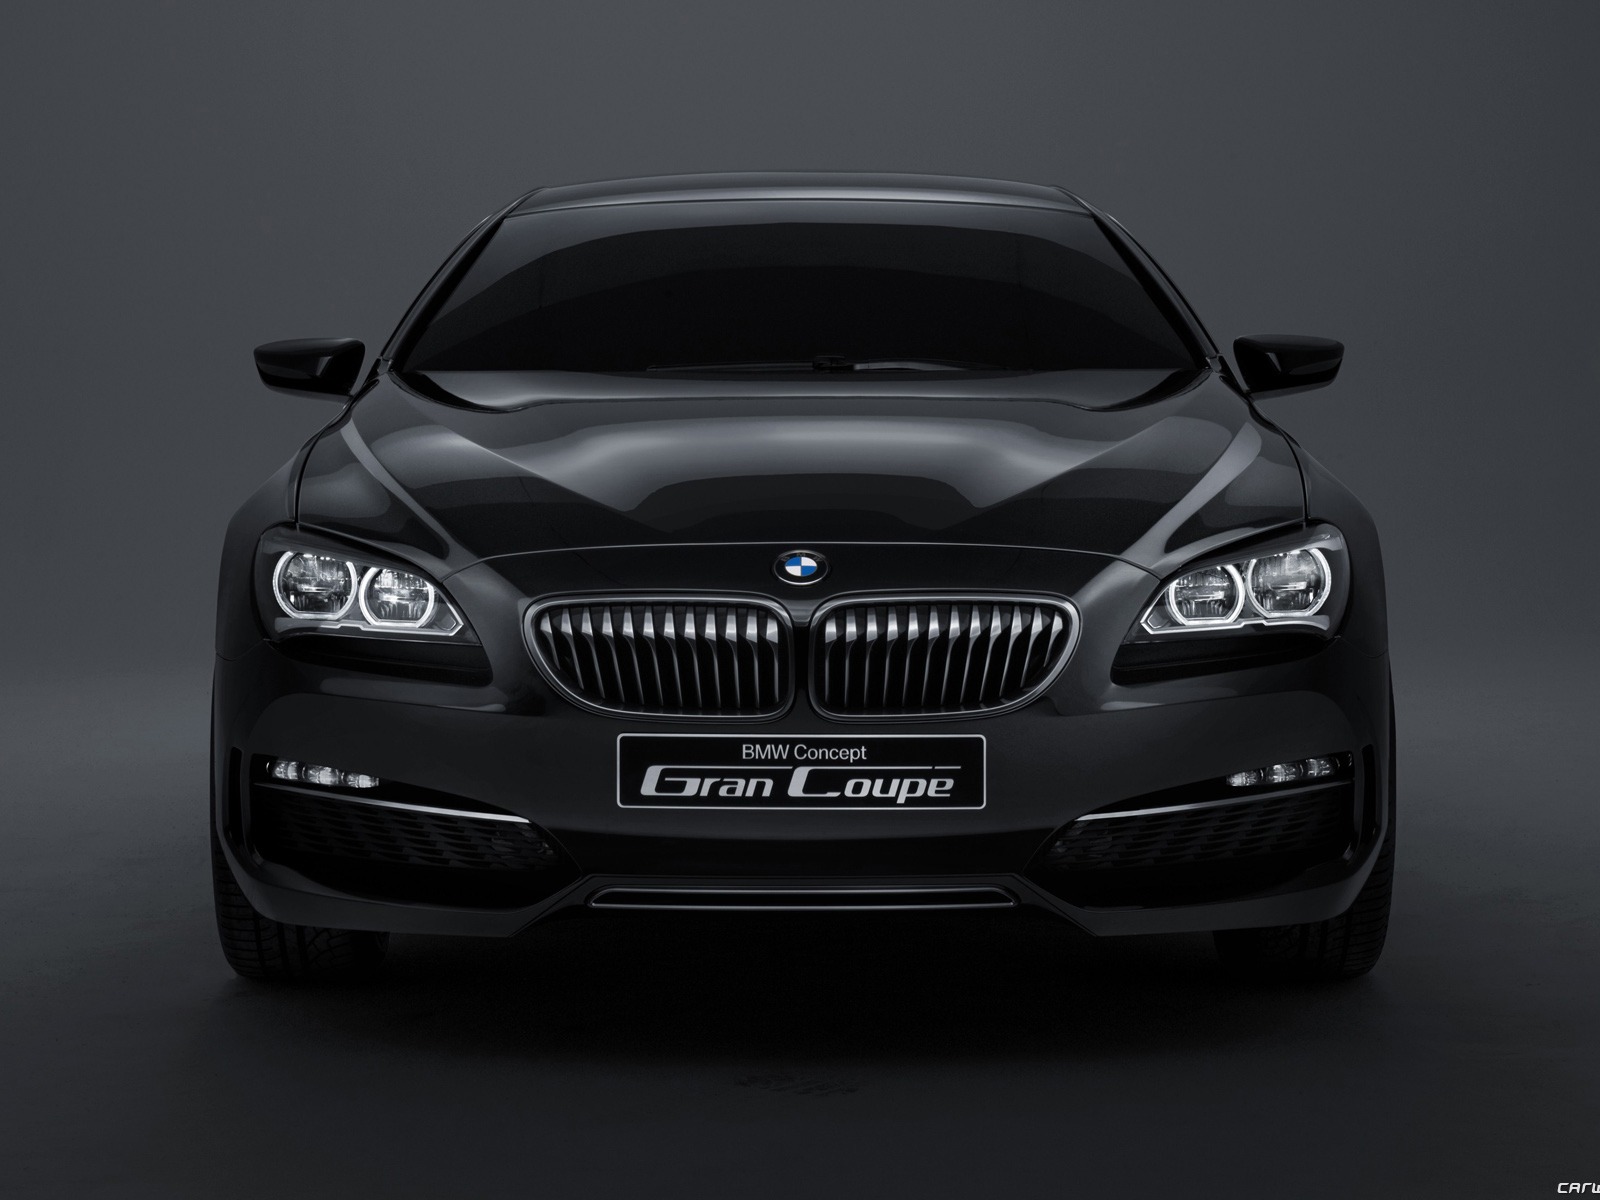 BMW Concept Gran Coupe - 2010 寶馬 #4 - 1600x1200